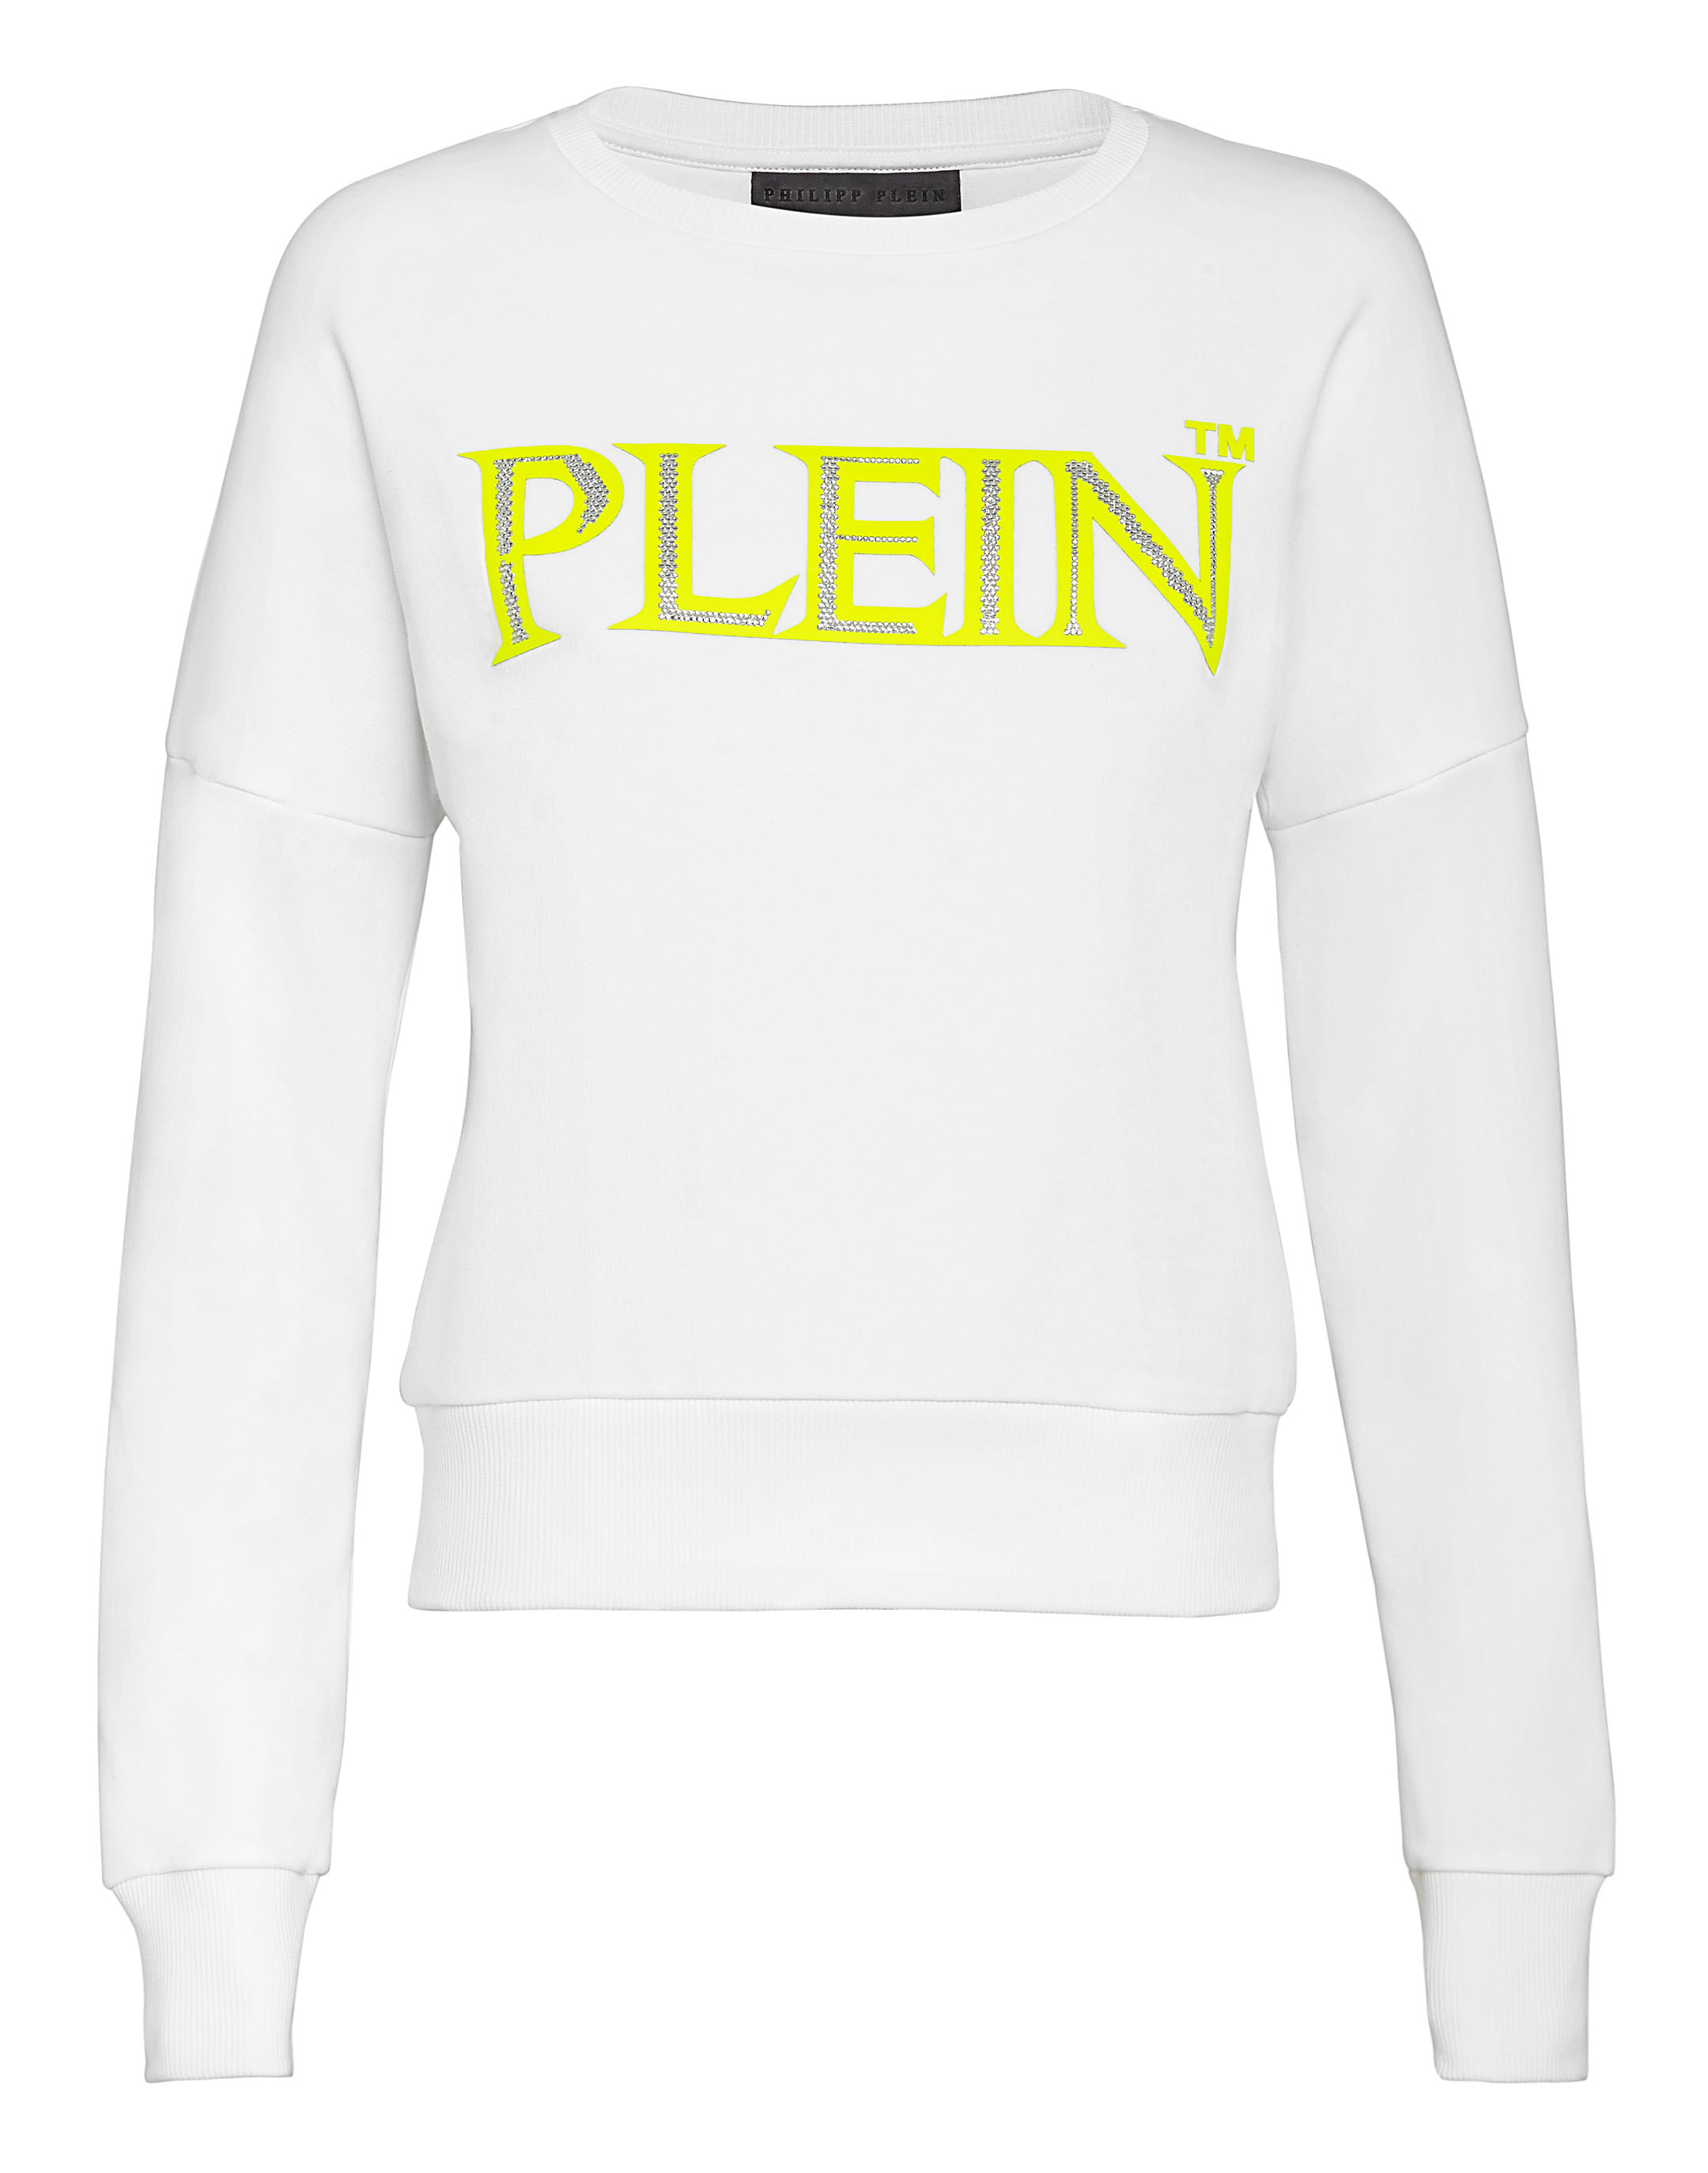 philipp plein white hoodie